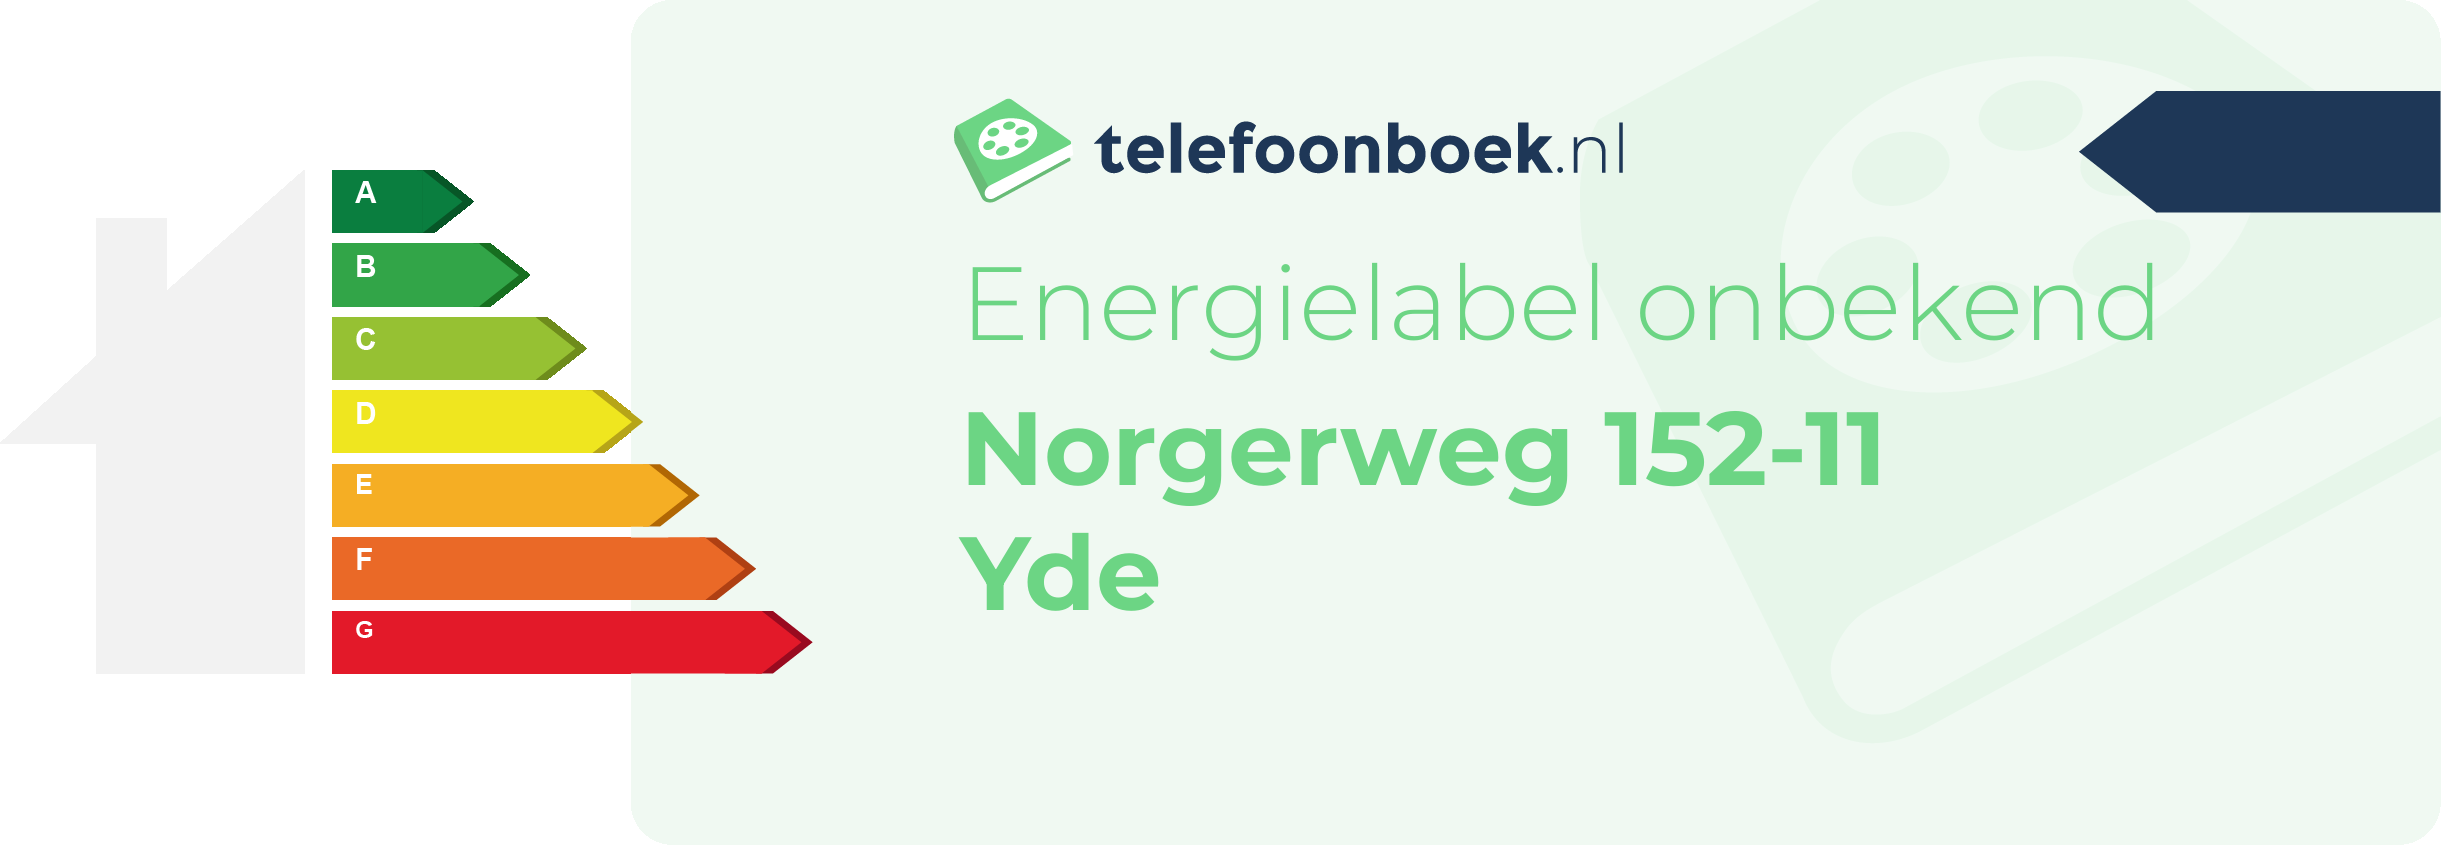 Energielabel Norgerweg 152-11 Yde